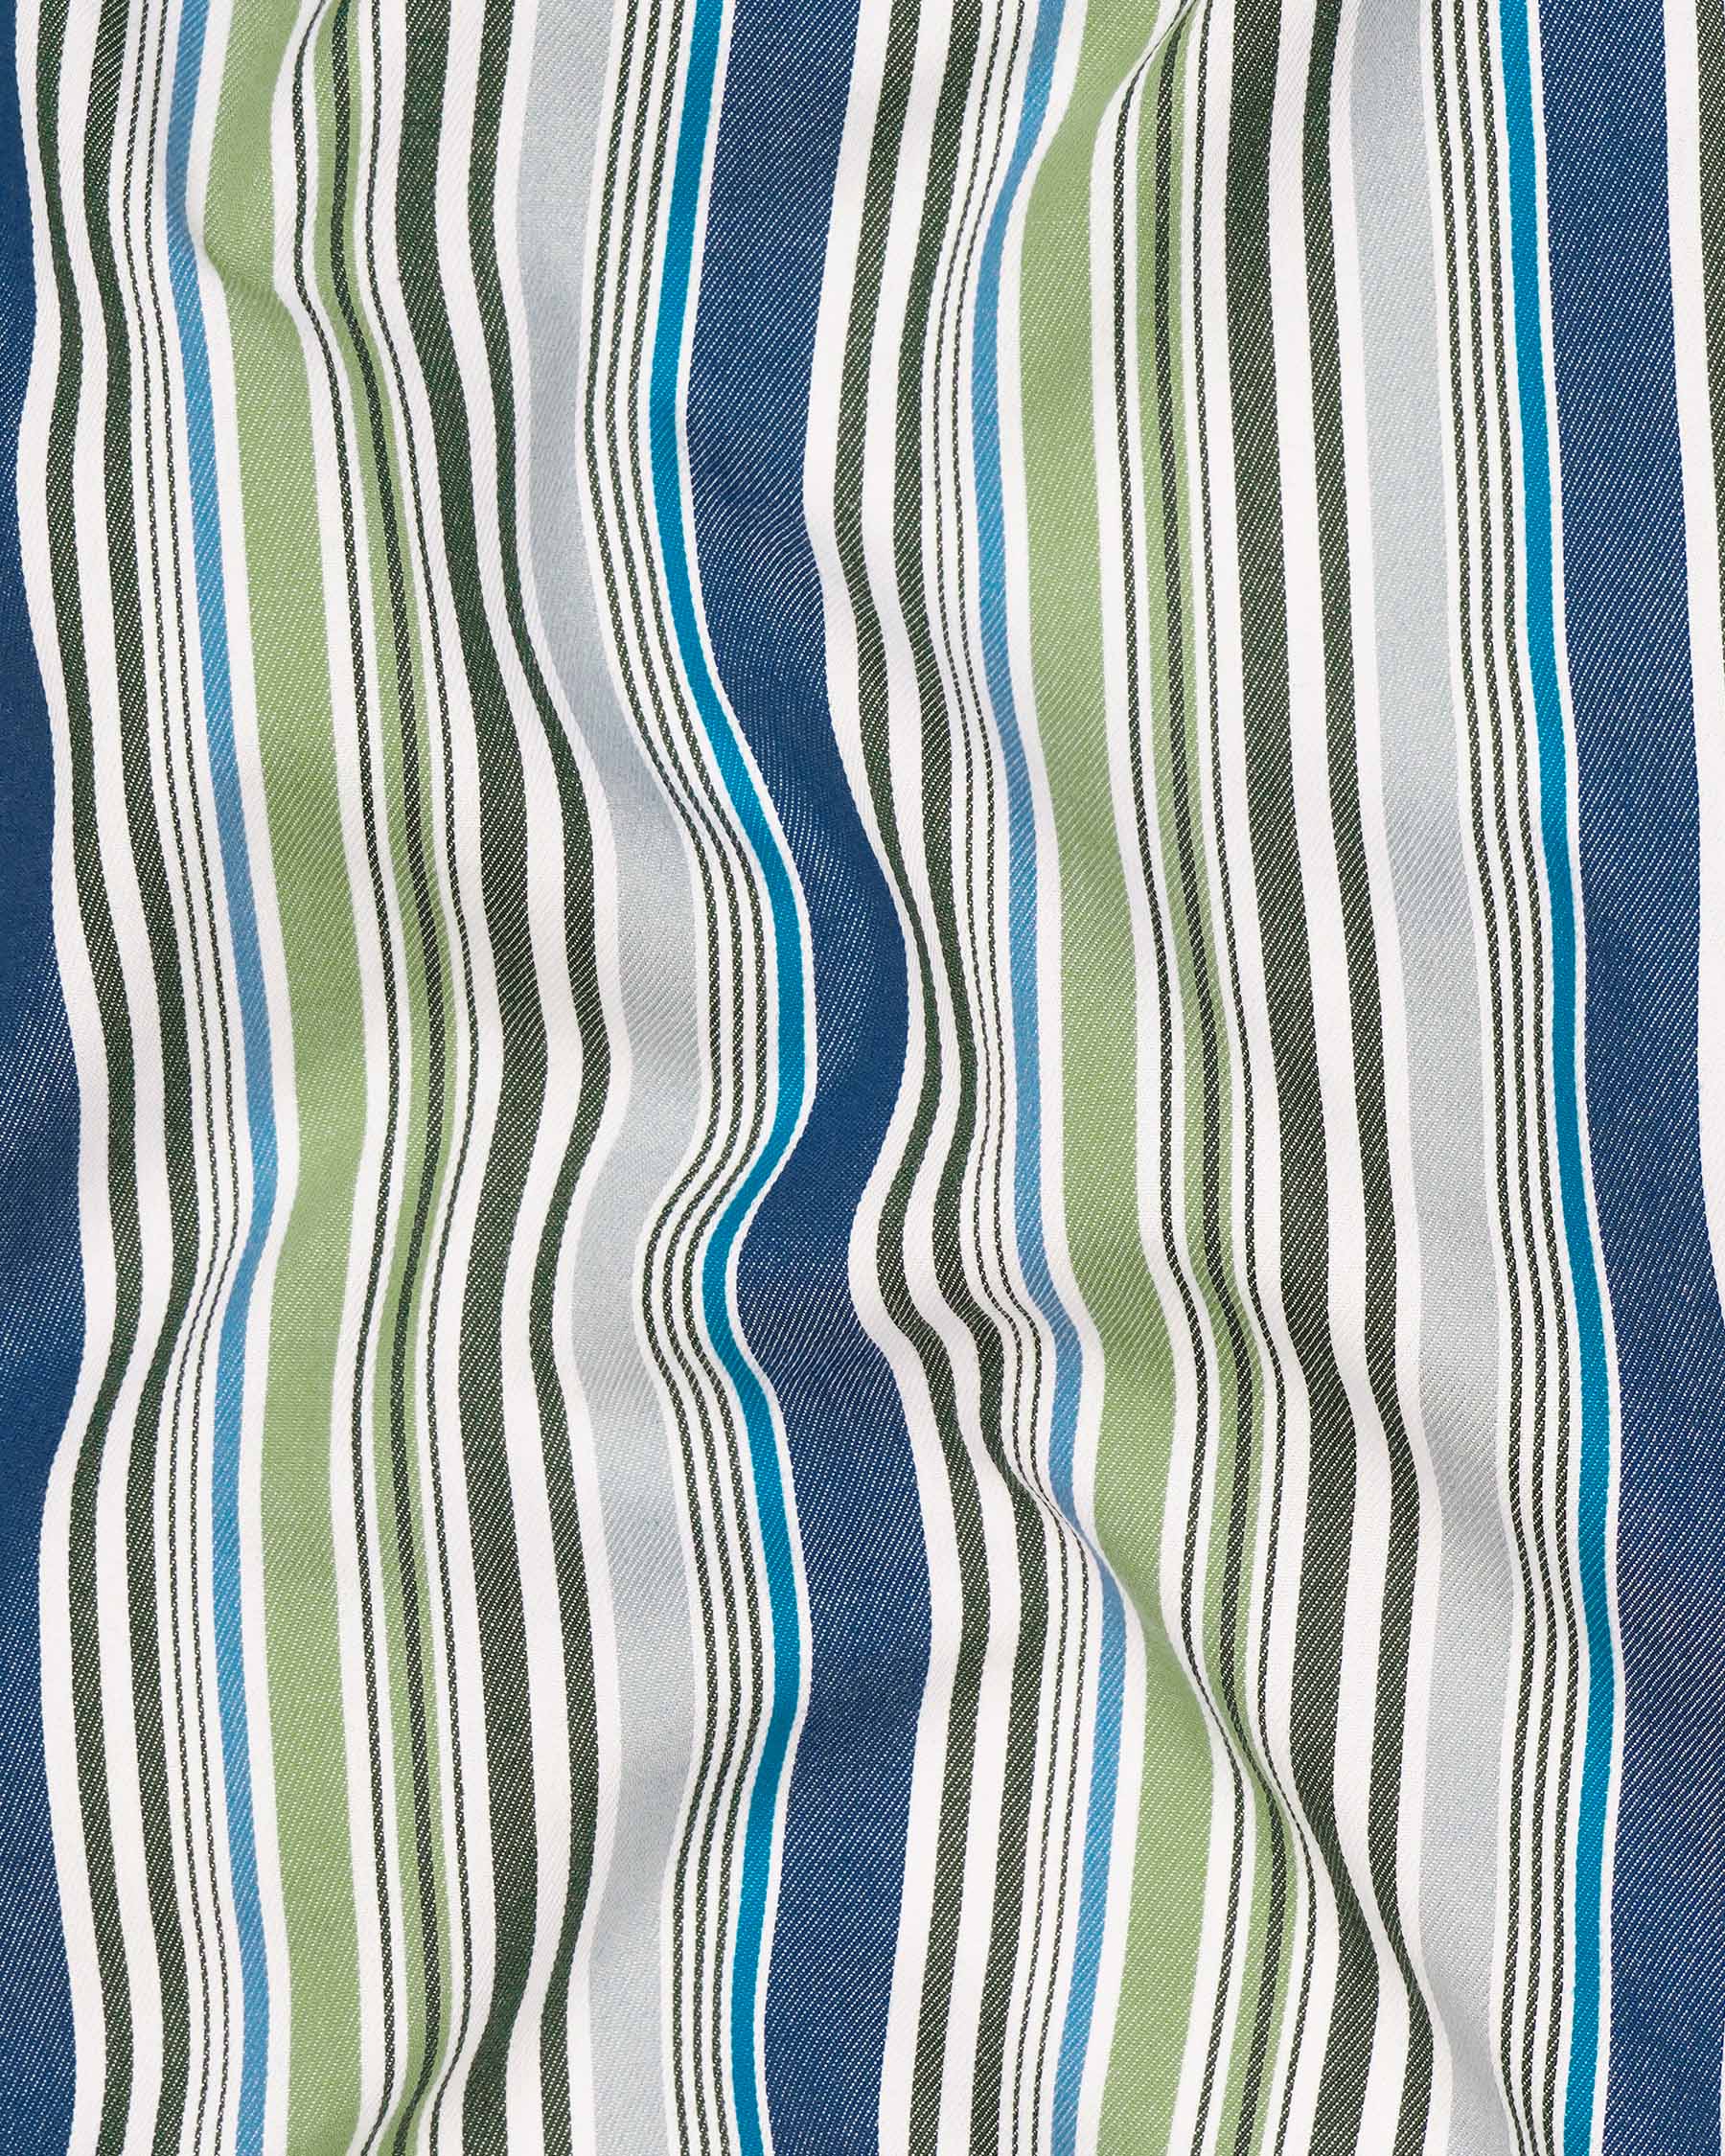 Greyish Green and Geyser Grey Striped Twill Textured Premium Cotton Shirt 7831-BD-BLE-38, 7831-BD-BLE-H-38, 7831-BD-BLE-39,7831-BD-BLE-H-39, 7831-BD-BLE-40, 7831-BD-BLE-H-40, 7831-BD-BLE-42, 7831-BD-BLE-H-42, 7831-BD-BLE-44, 7831-BD-BLE-H-44, 7831-BD-BLE-46, 7831-BD-BLE-H-46, 7831-BD-BLE-48, 7831-BD-BLE-H-48, 7831-BD-BLE-50, 7831-BD-BLE-H-50, 7831-BD-BLE-52, 7831-BD-BLE-H-52